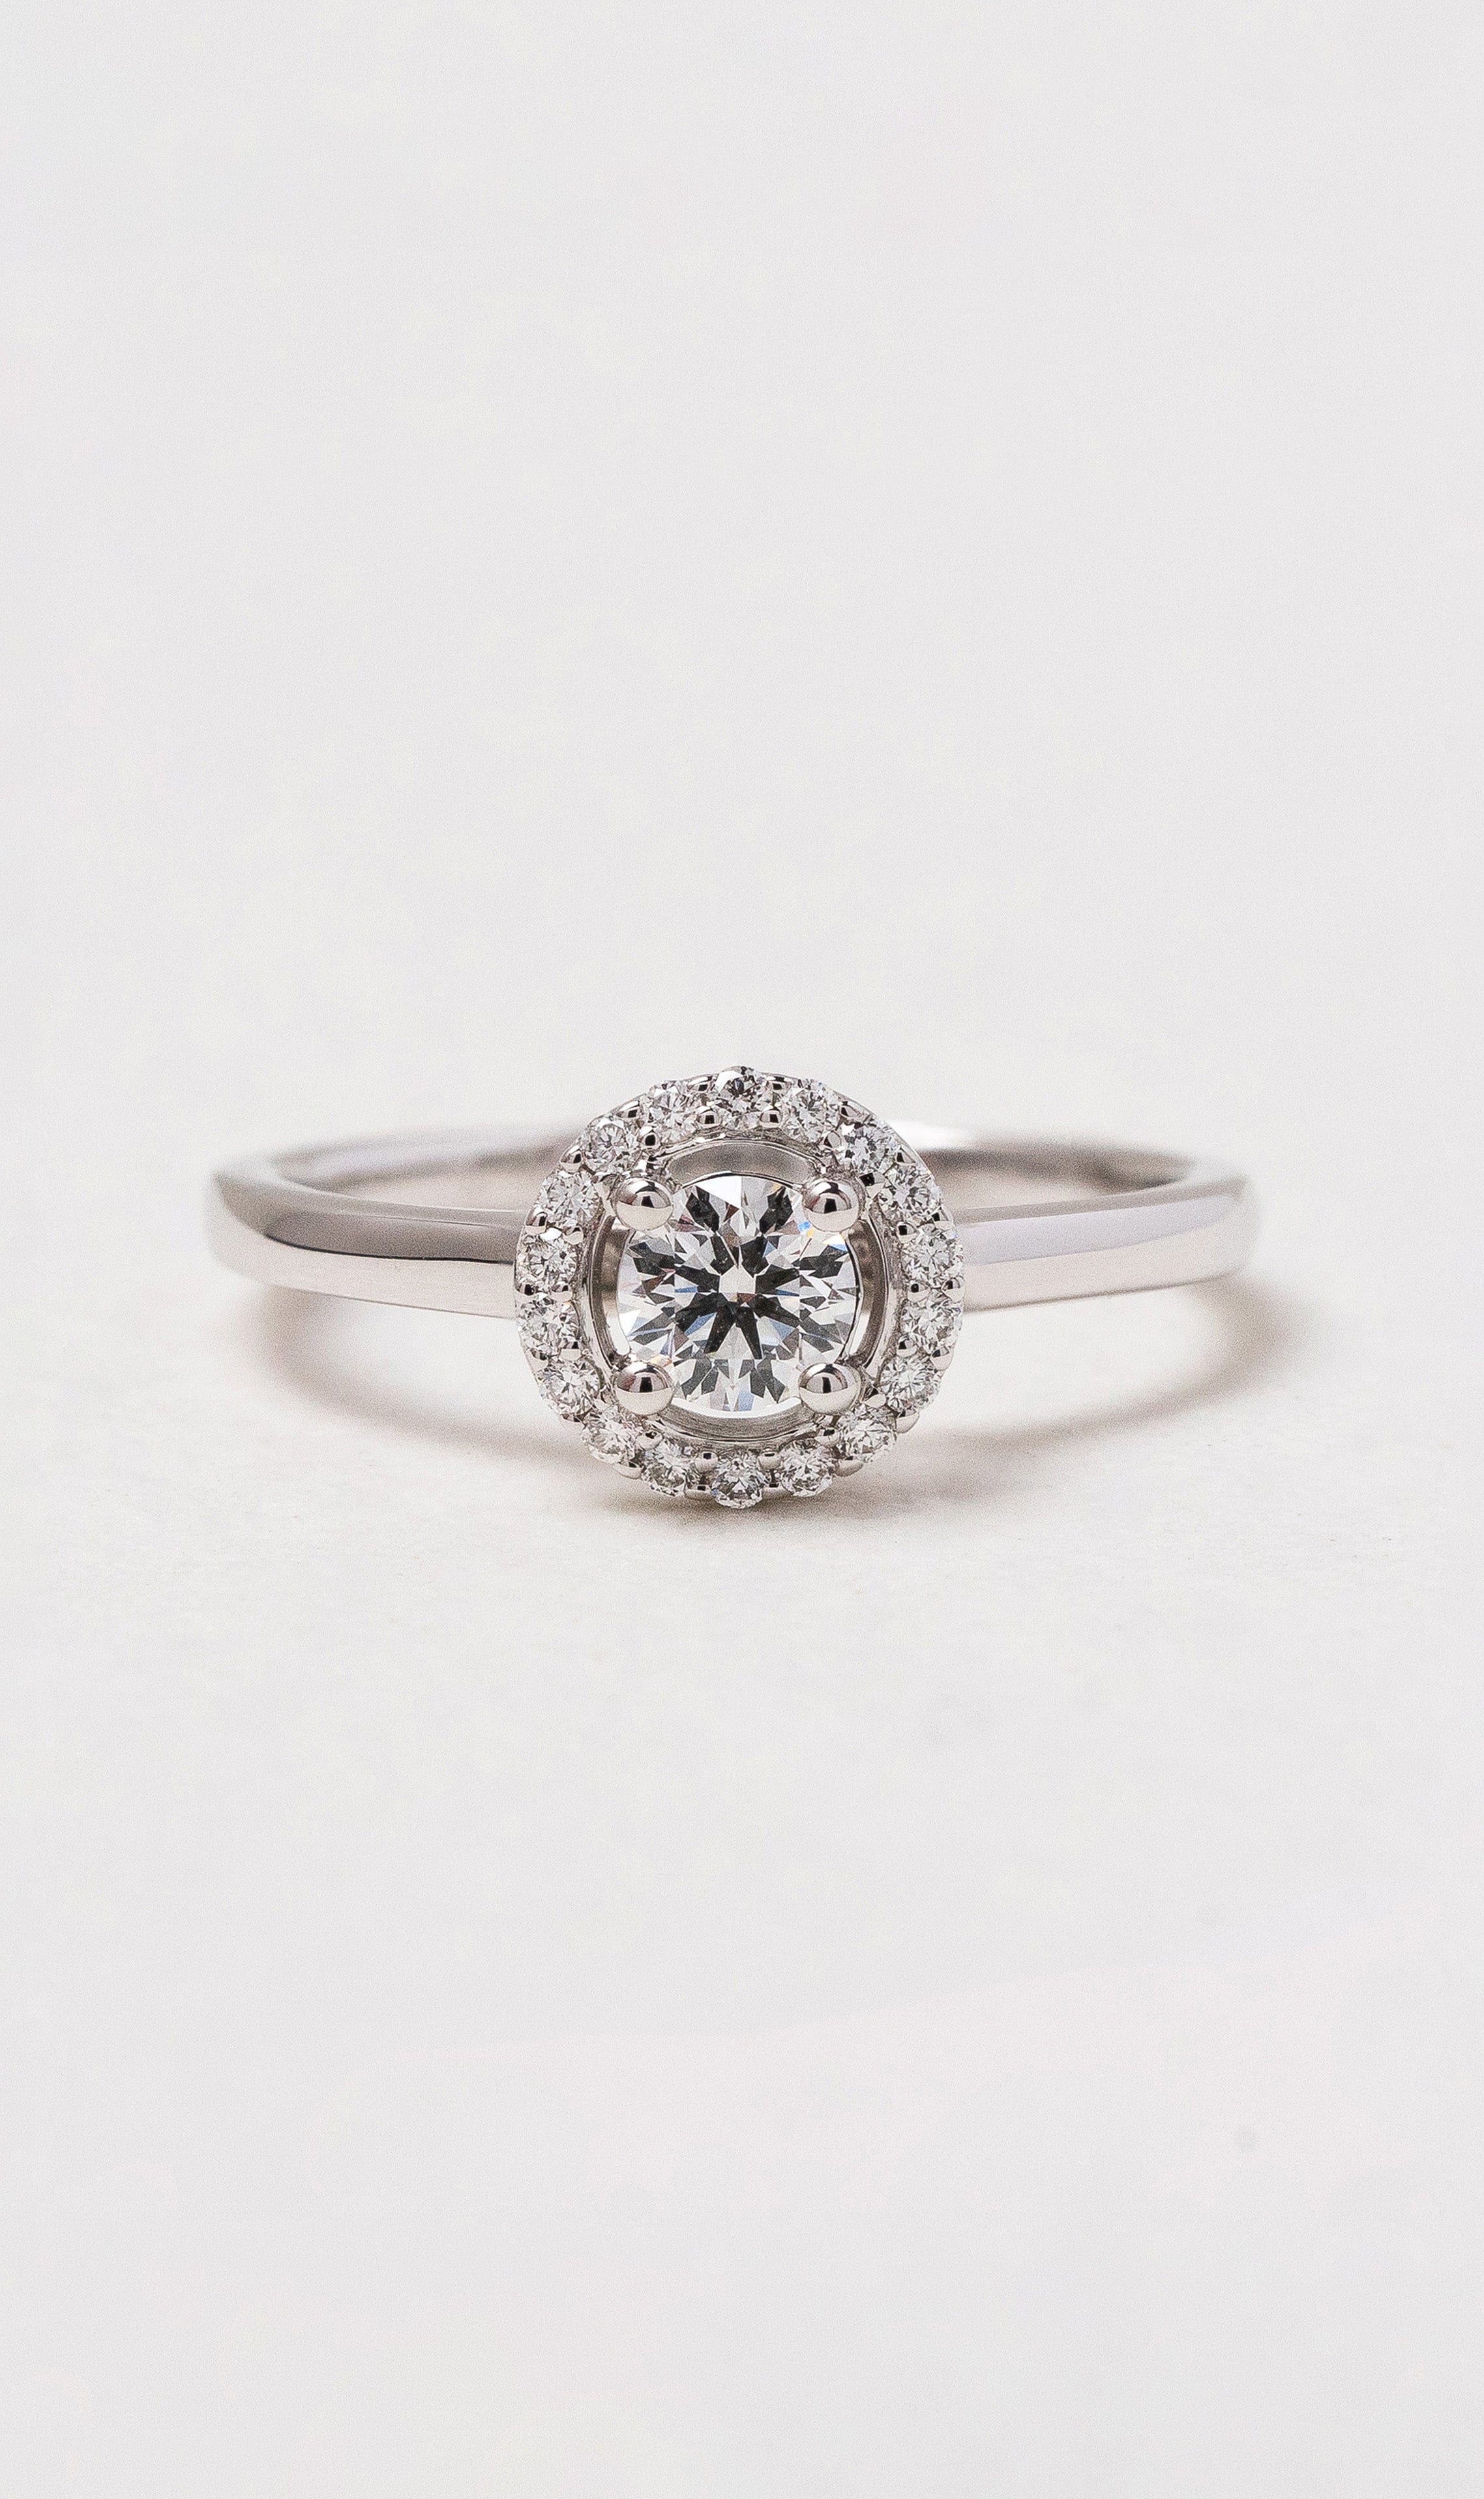 Hogans Family Jewellers 18K WG Halo Diamond Ring